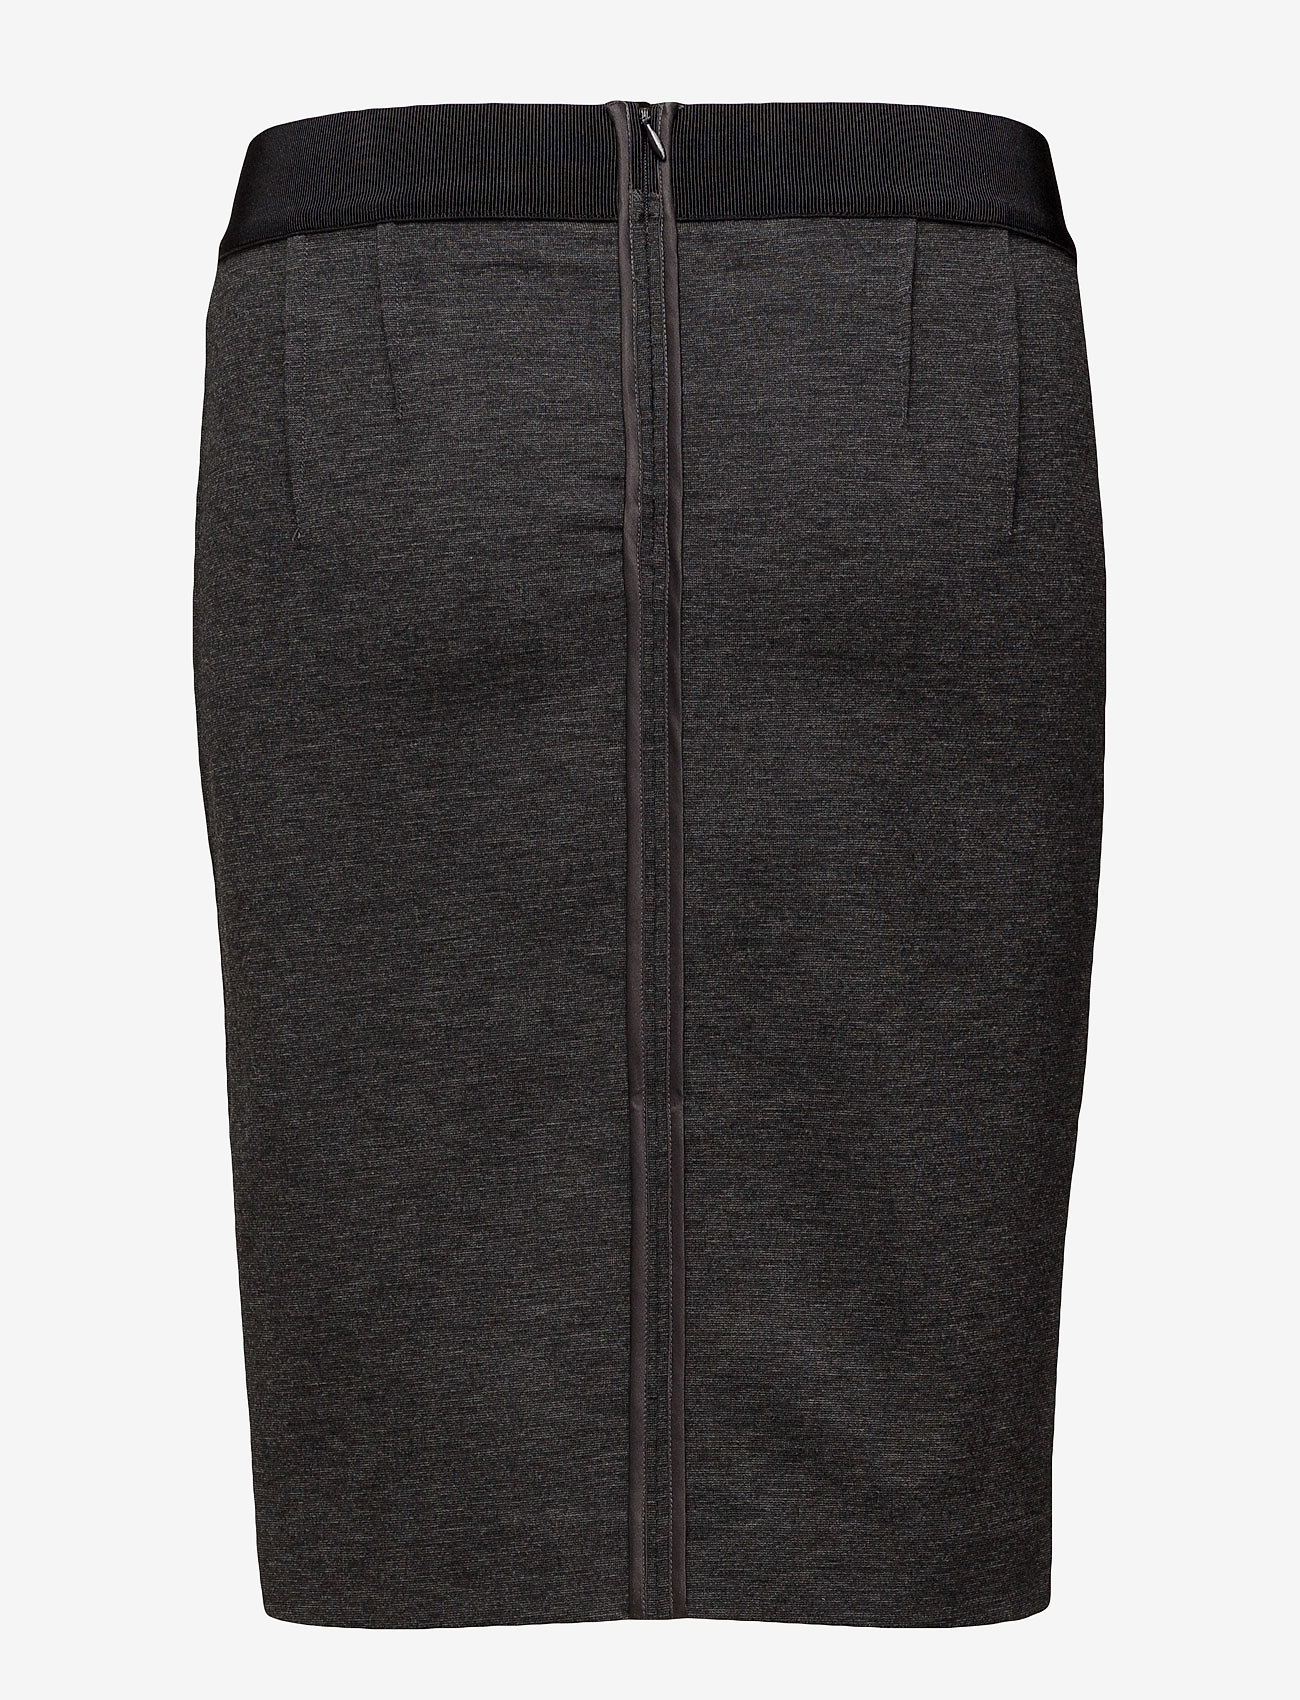 InWear - Olally - pencil skirts - dark grey melange - 1